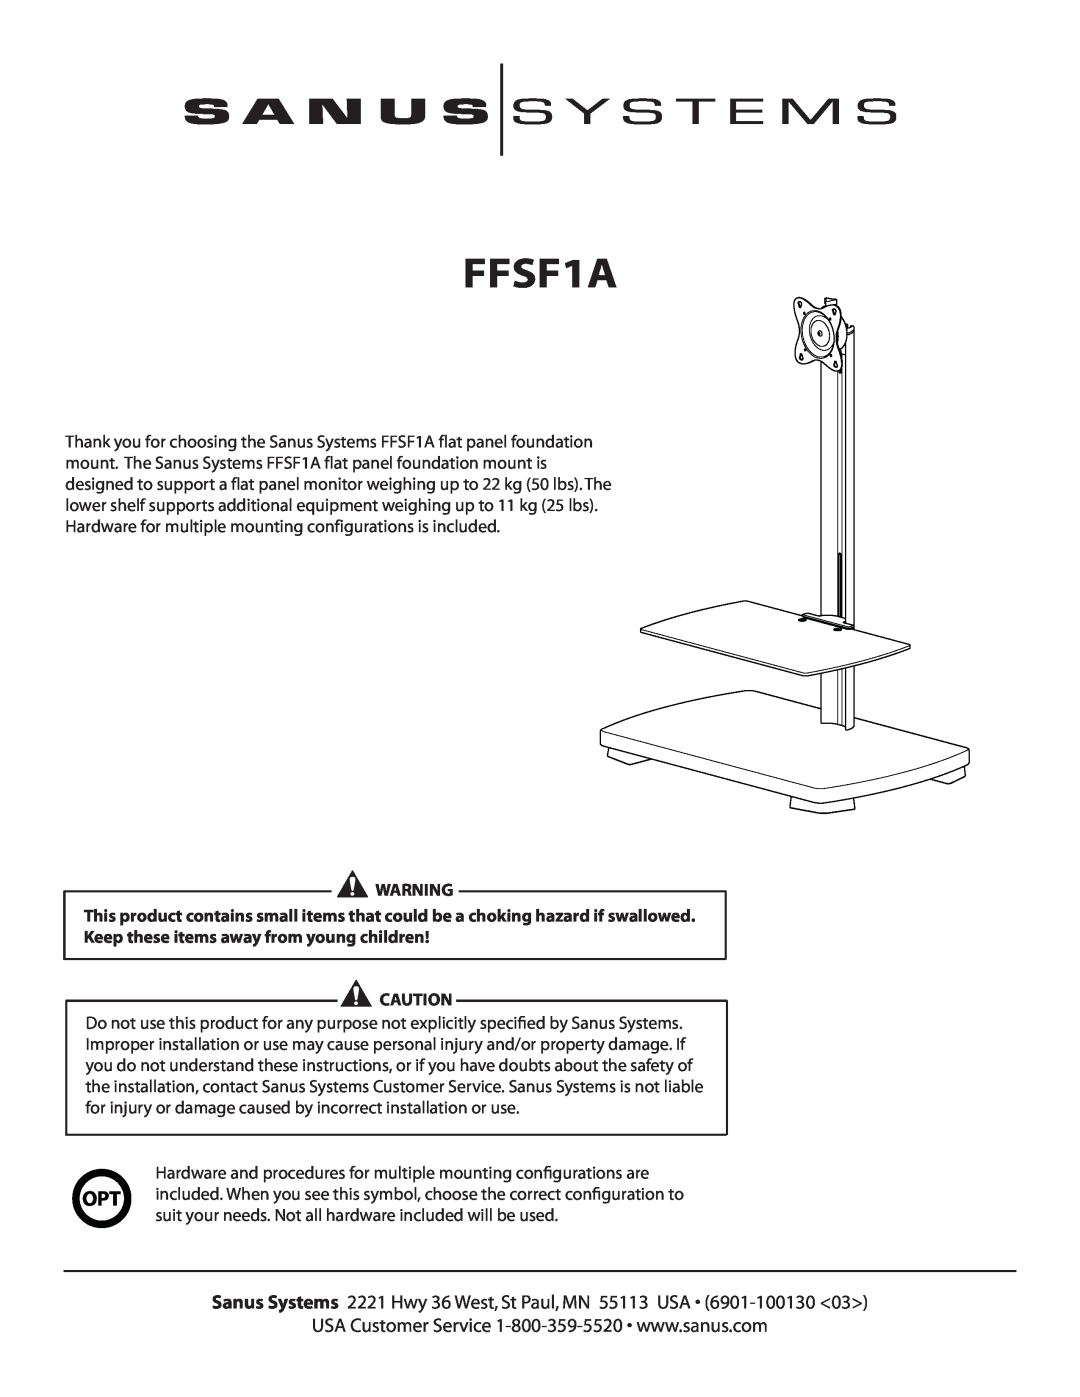 Sanus Systems FFSF1A manual 